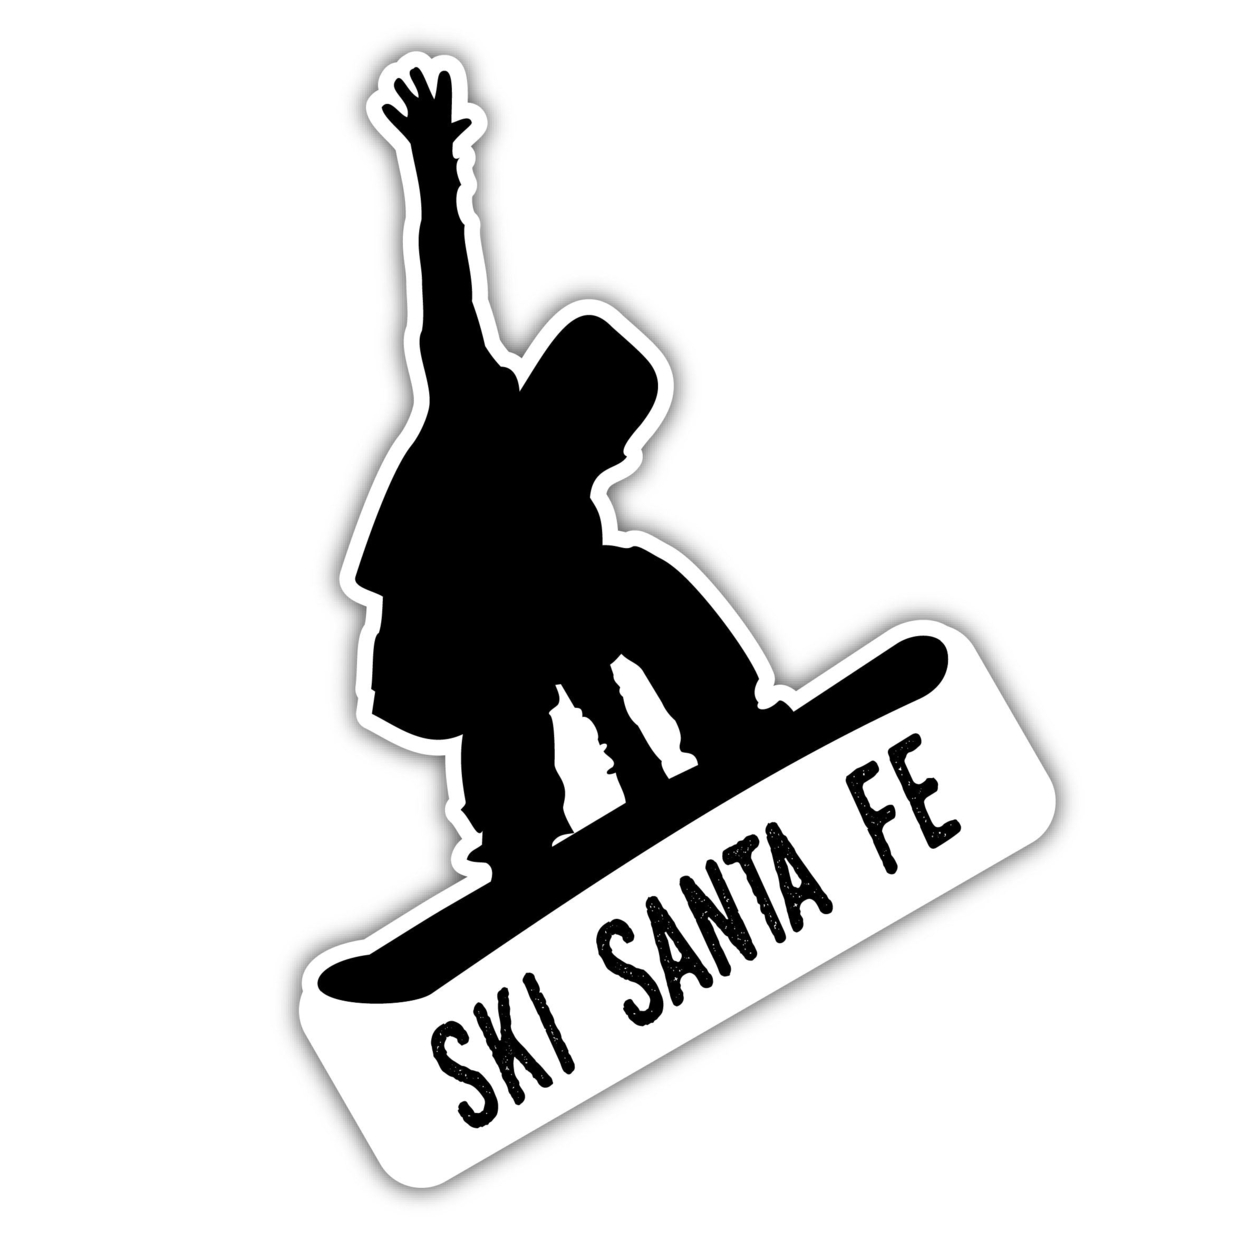 Ski Santa Fe New Mexico Ski Adventures Souvenir 4 Inch Vinyl Decal Sticker Board Design